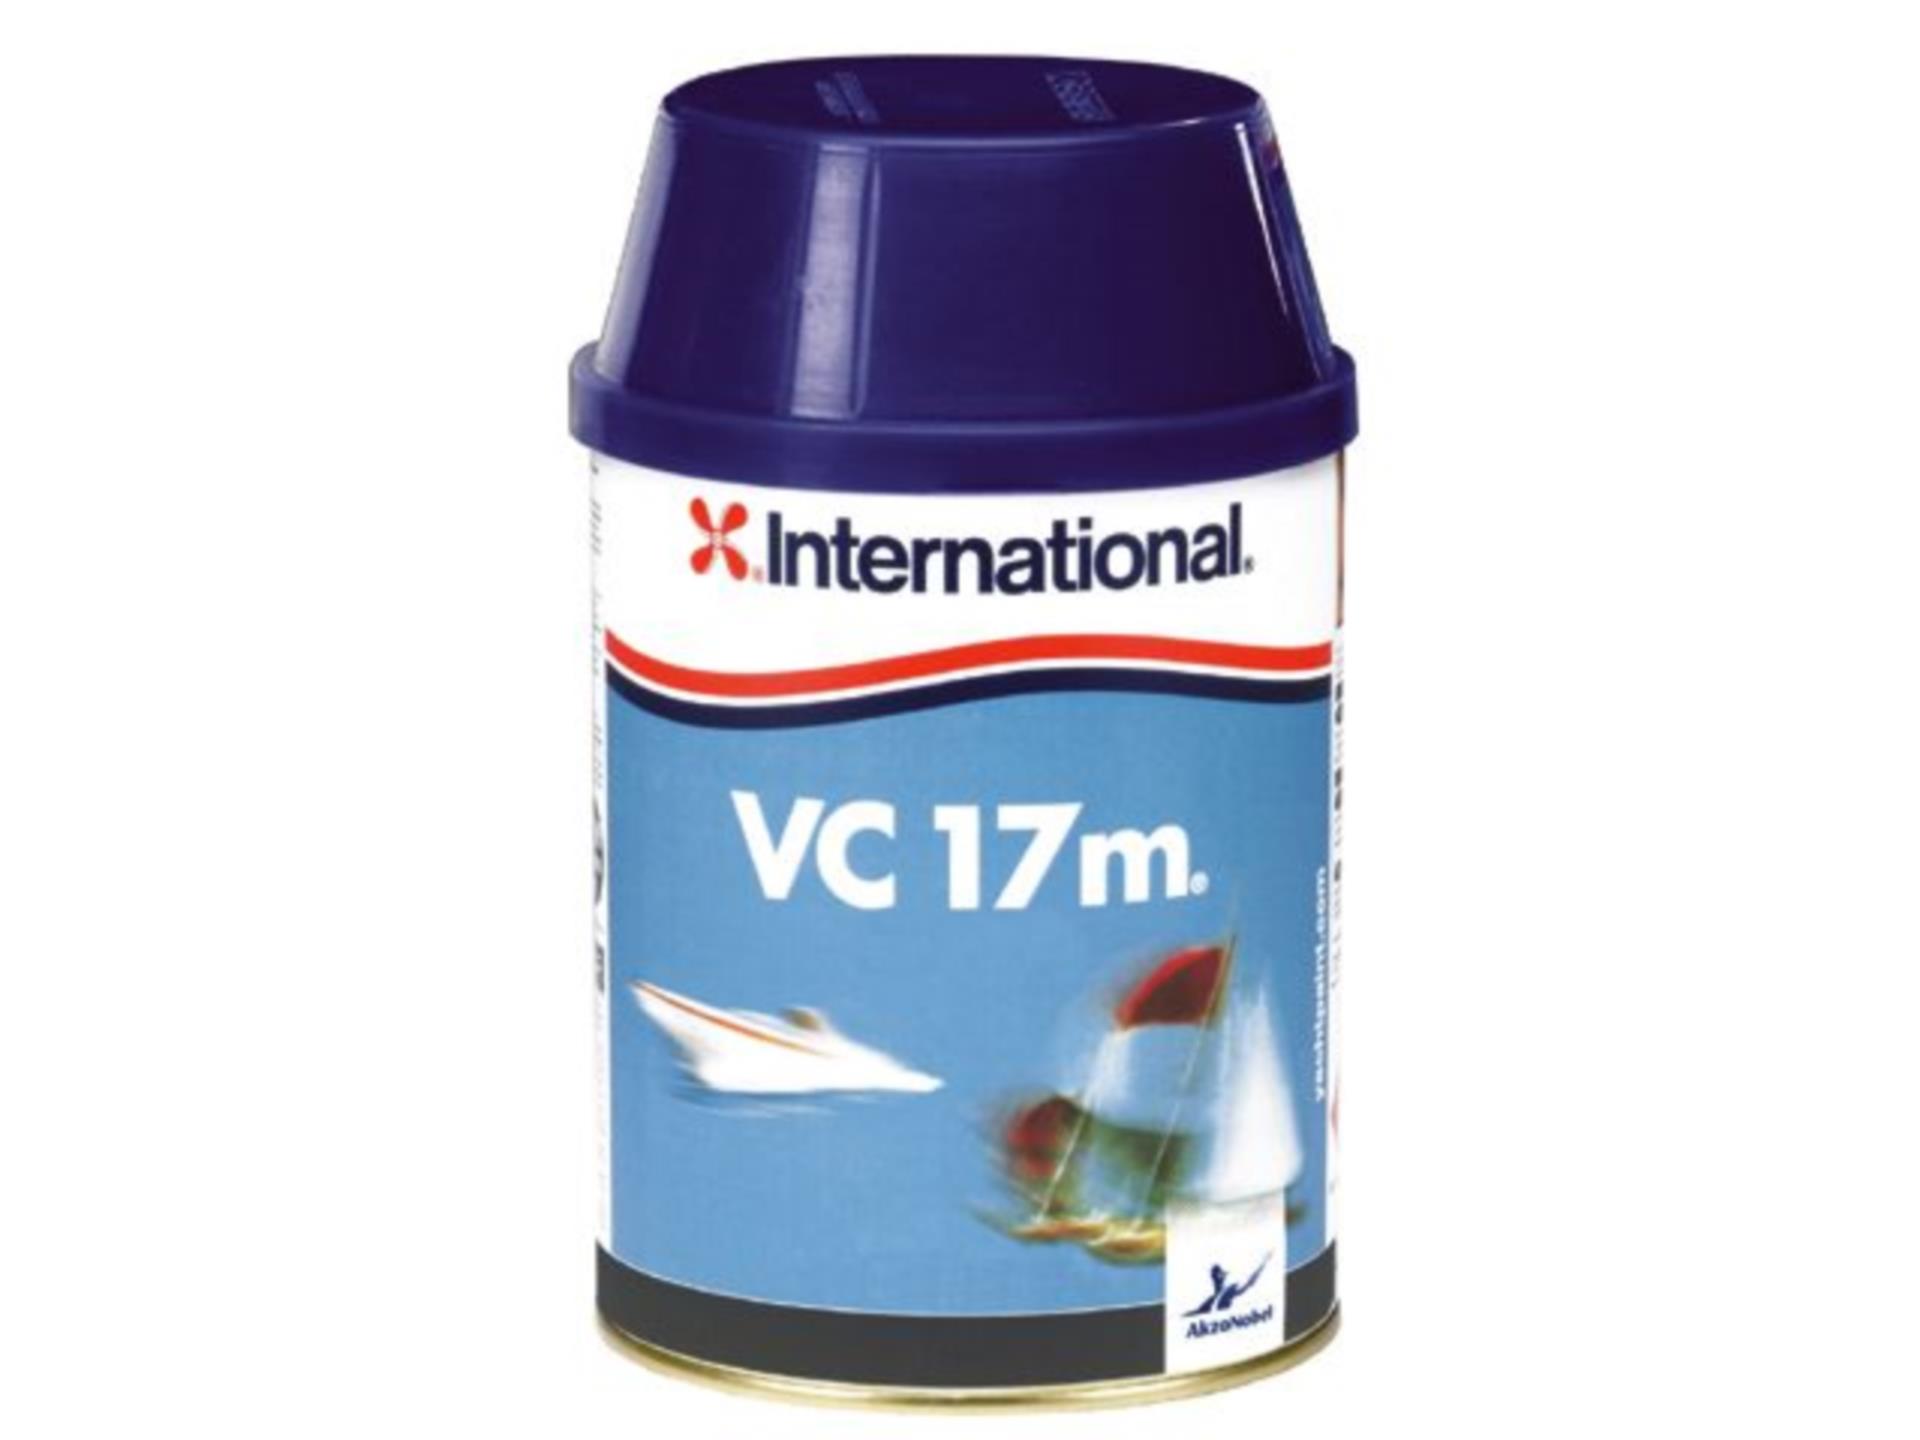 International VC 17m graphit, 750 ml